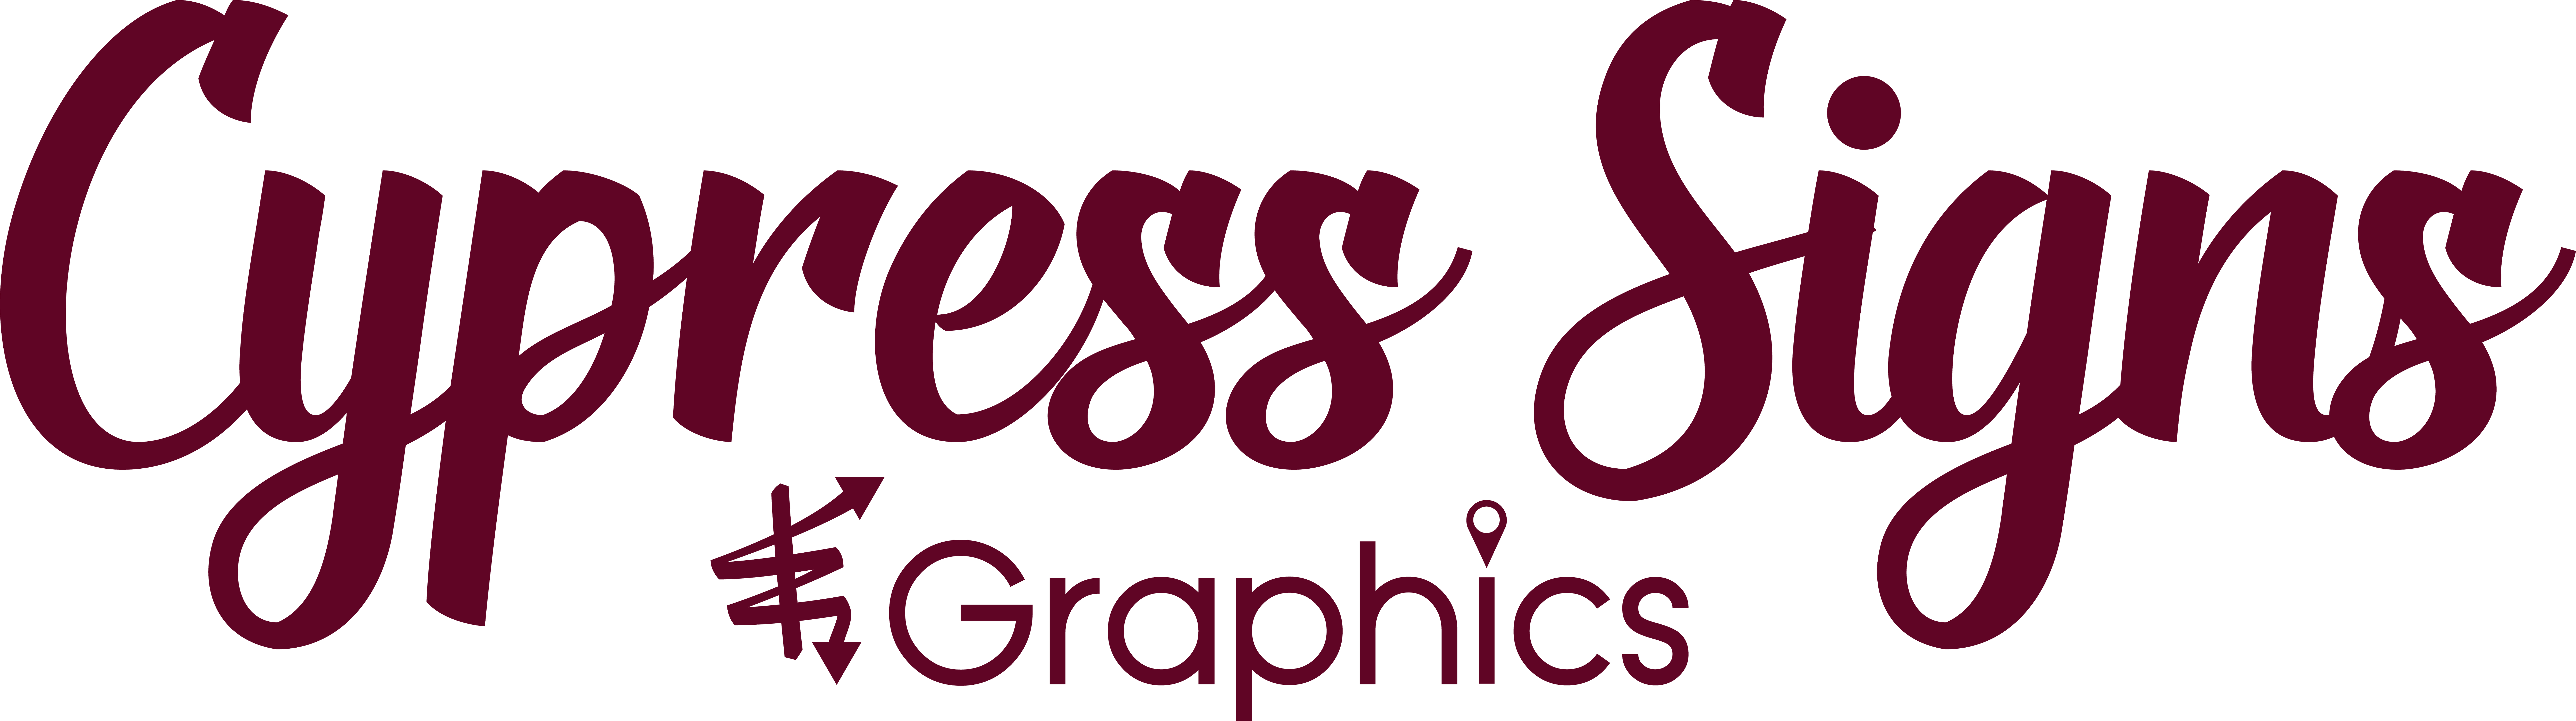 Cypress Signs LLC's Logo